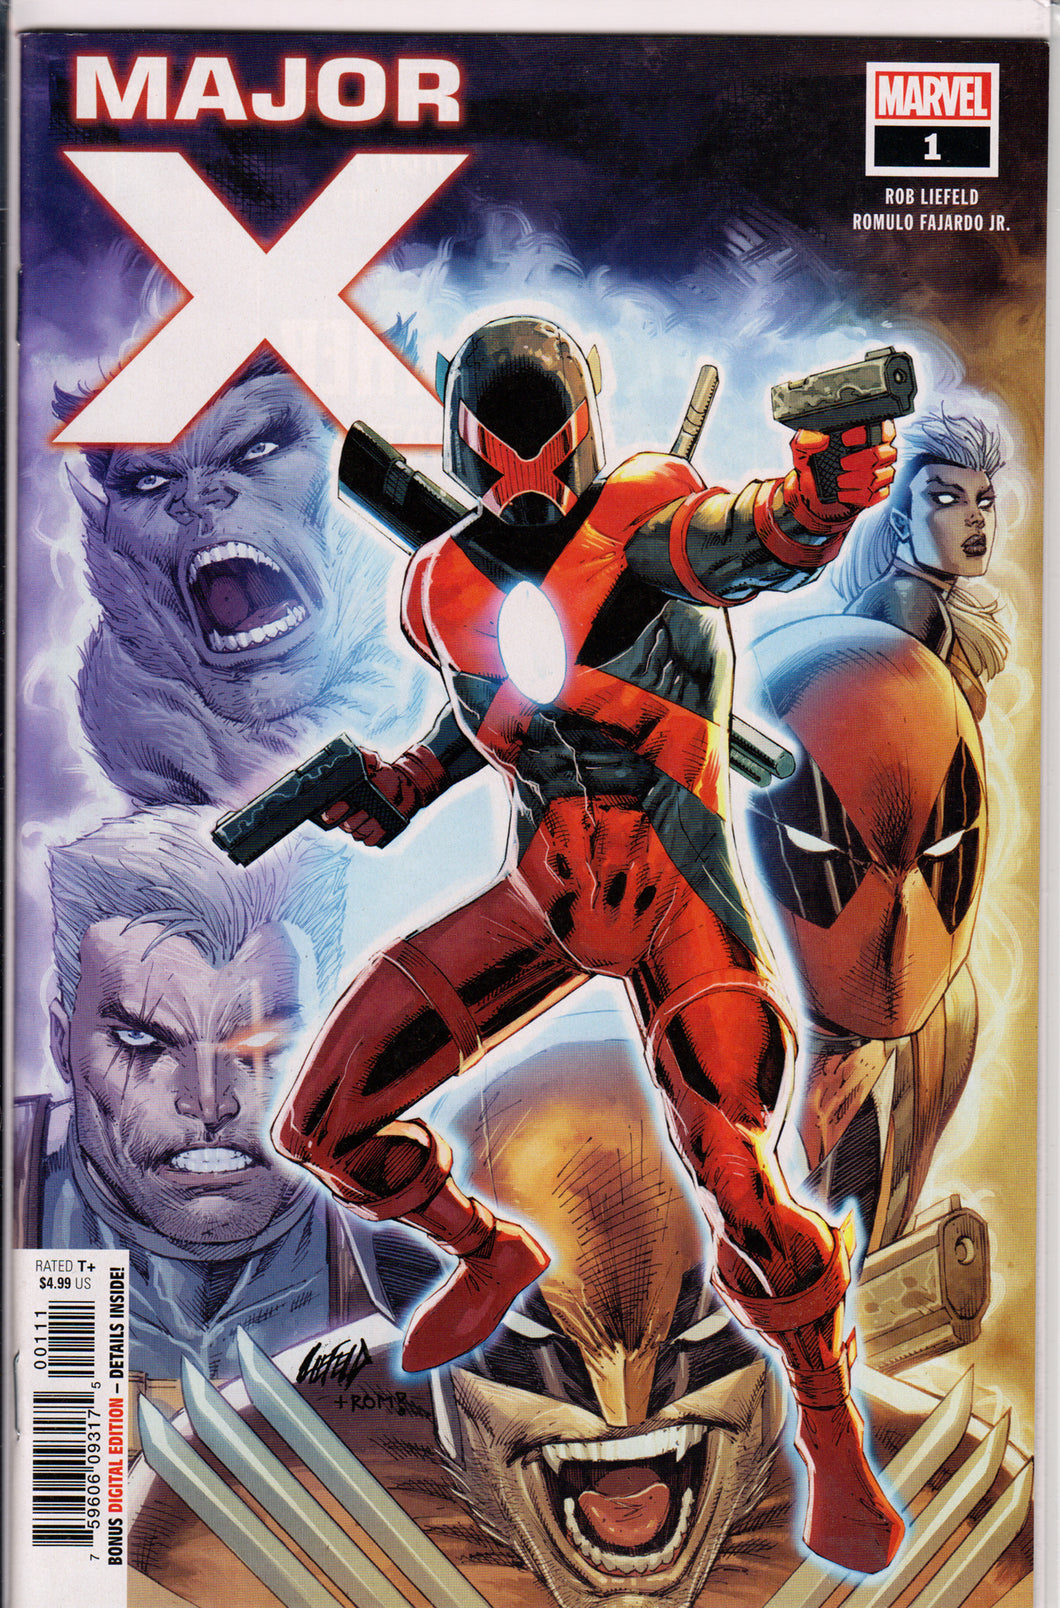 MAJOR X #1 (1ST PRINT) COMIC BOOK ~ Rob Liefeld ~ Marvel Comics